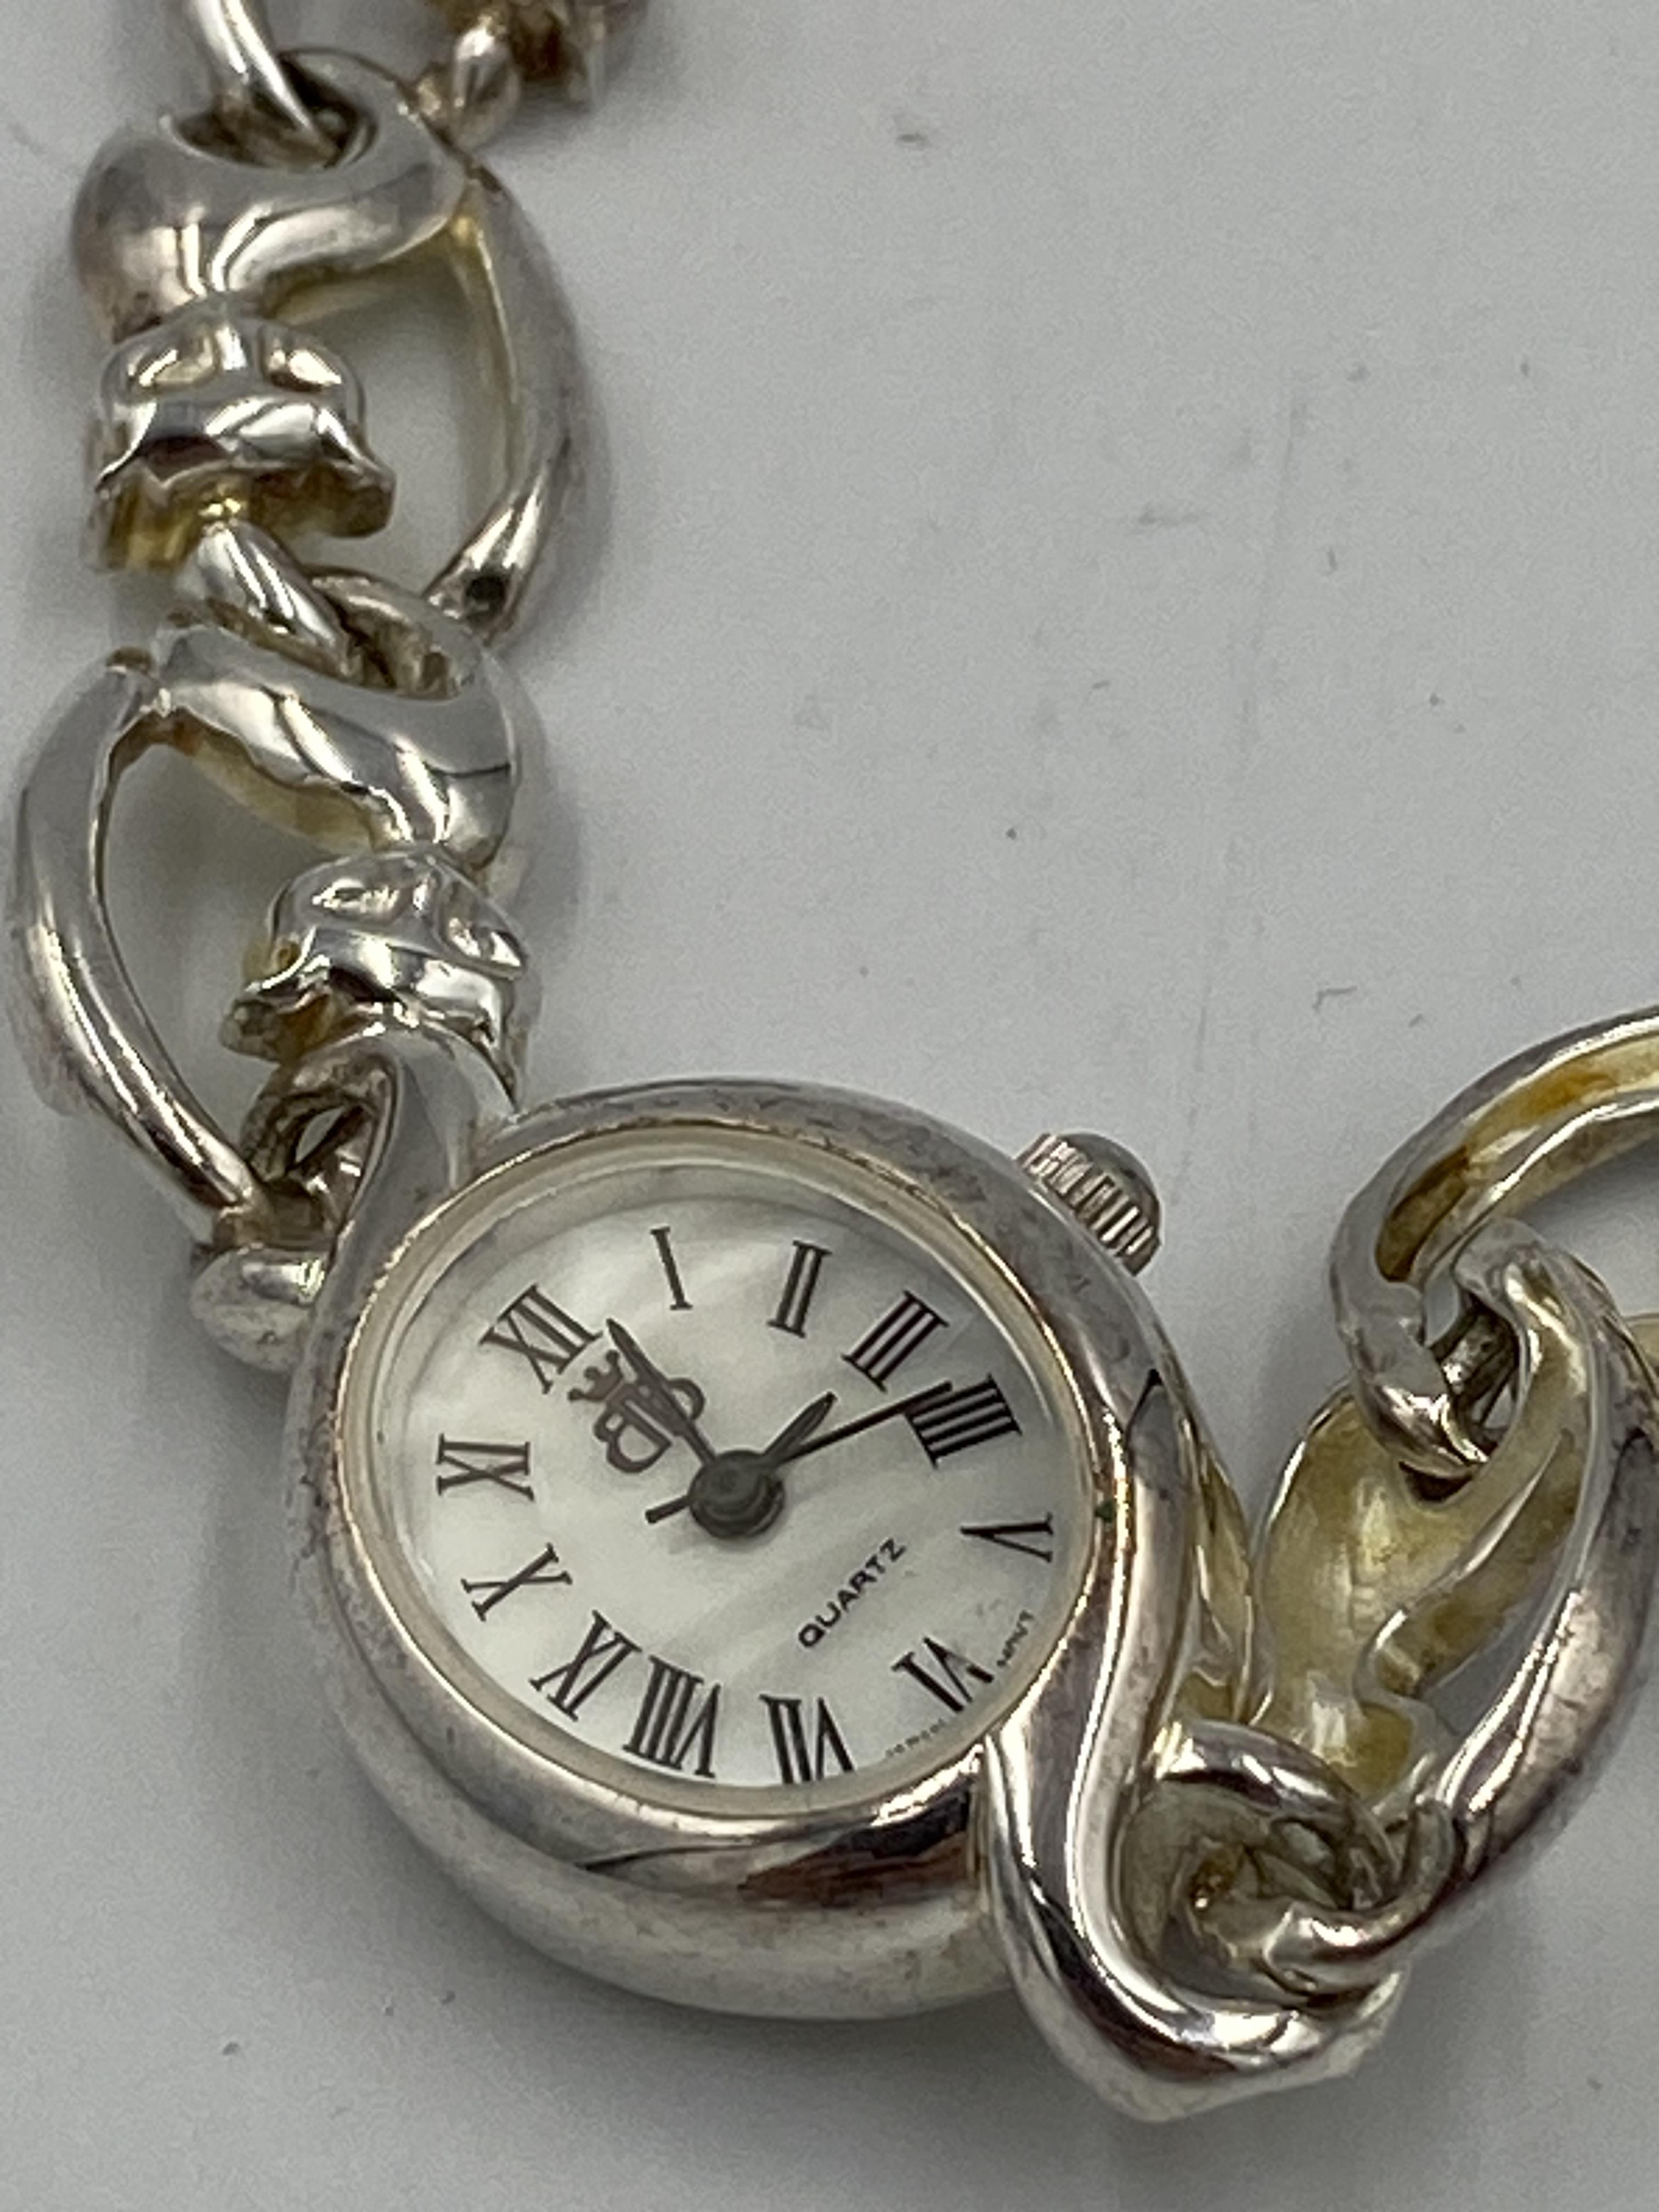 Silver ladies quartz watch - Image 2 of 3